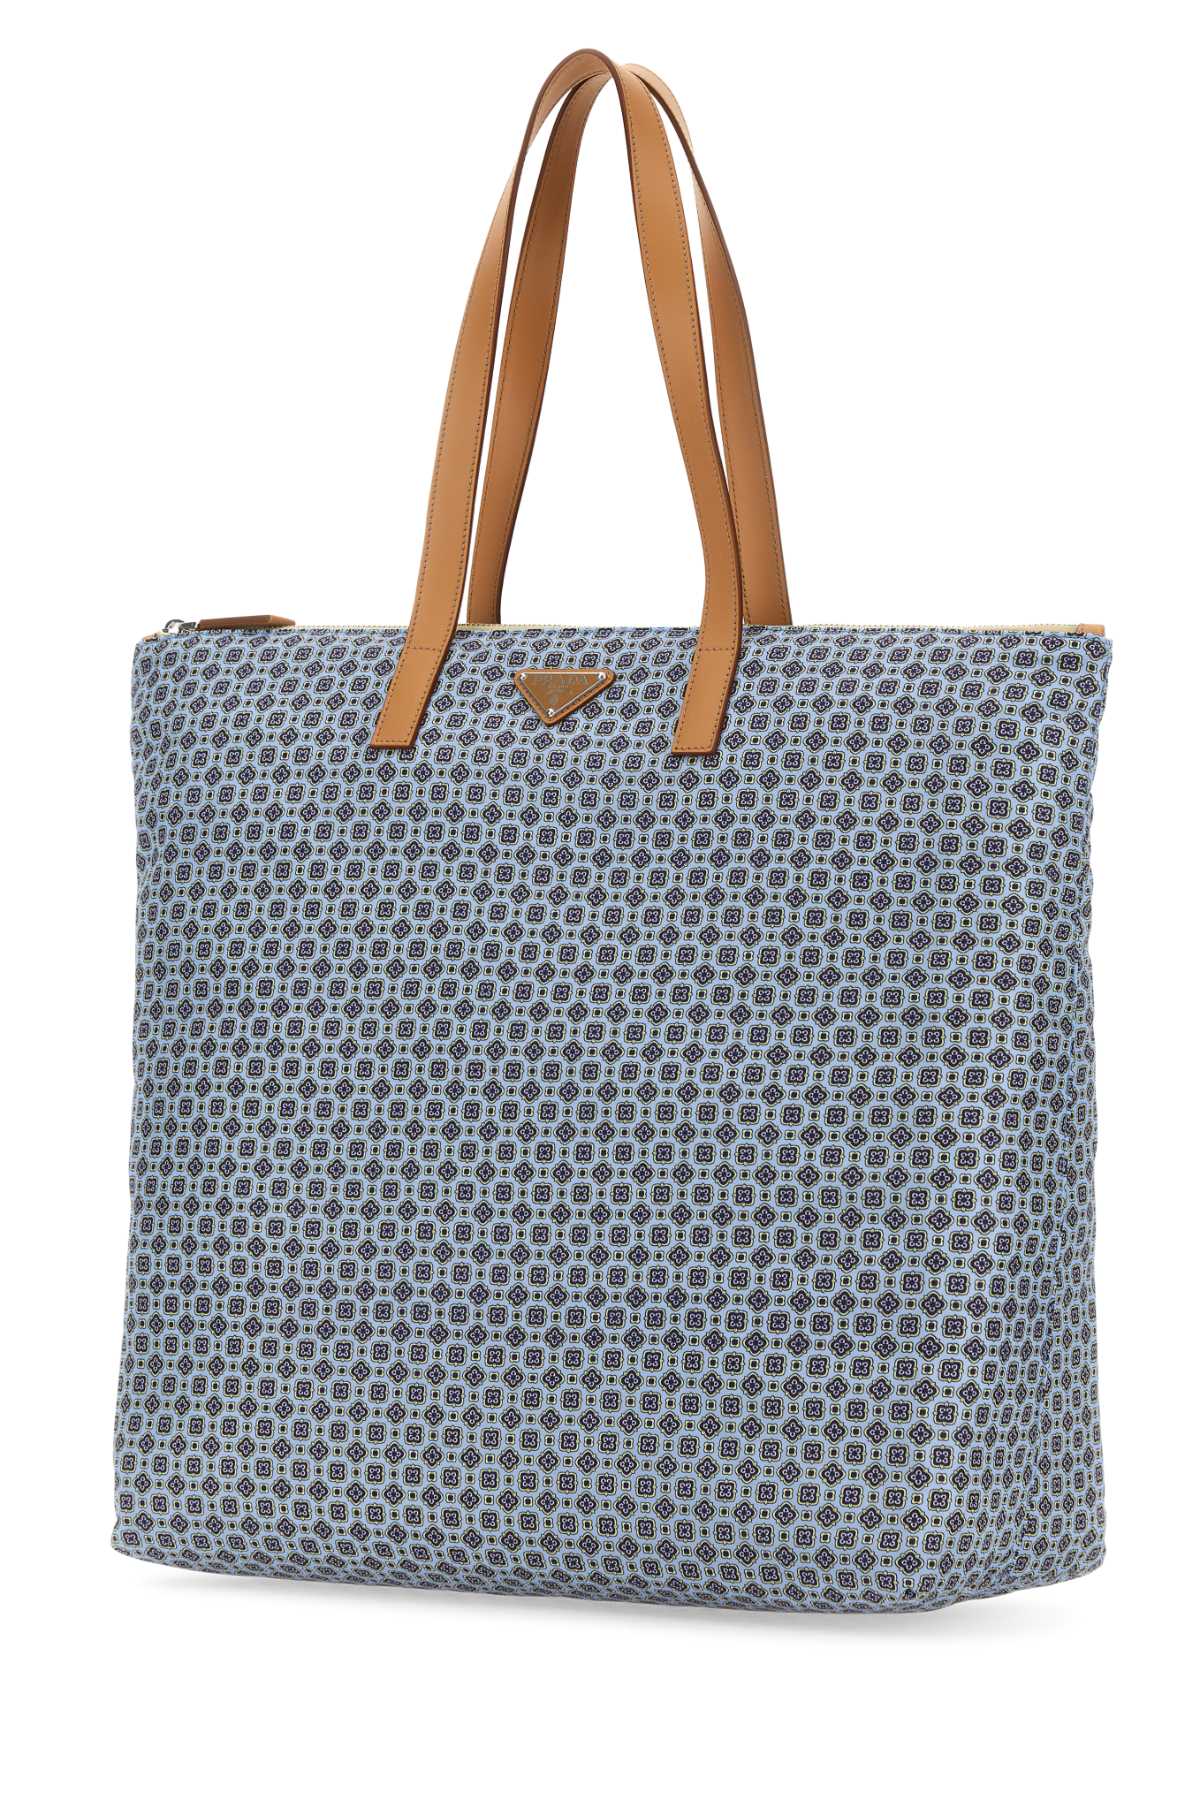 Prada Printed Two-tone Re-nylon Tote Bag In Astralenatural